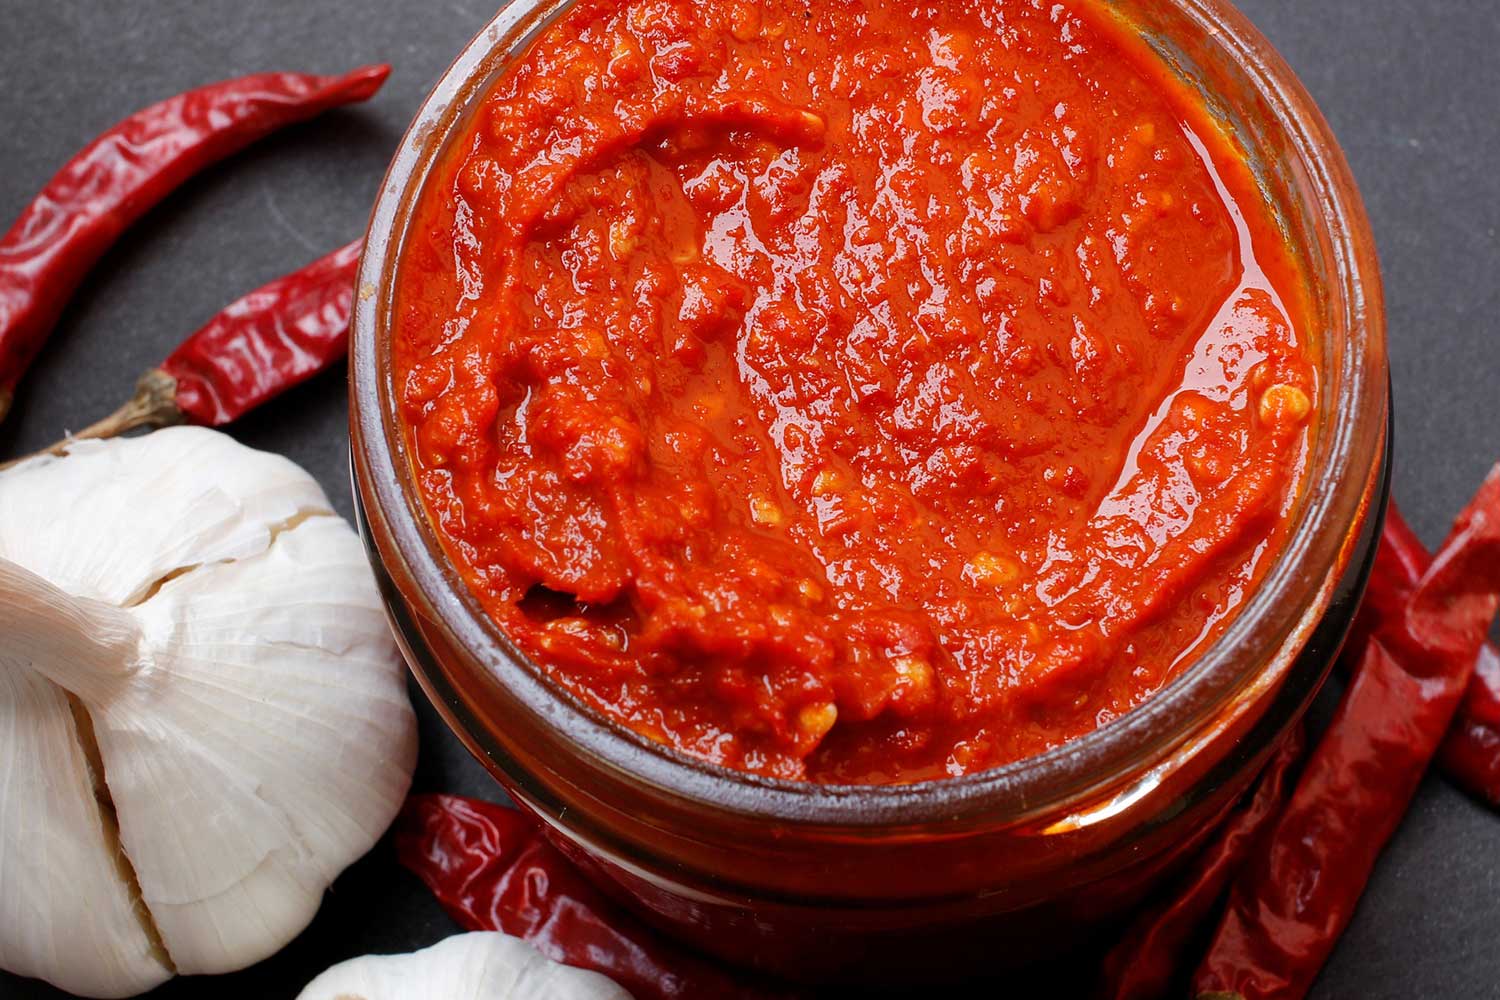 Best Substitutes for Sriracha Hot Sauce